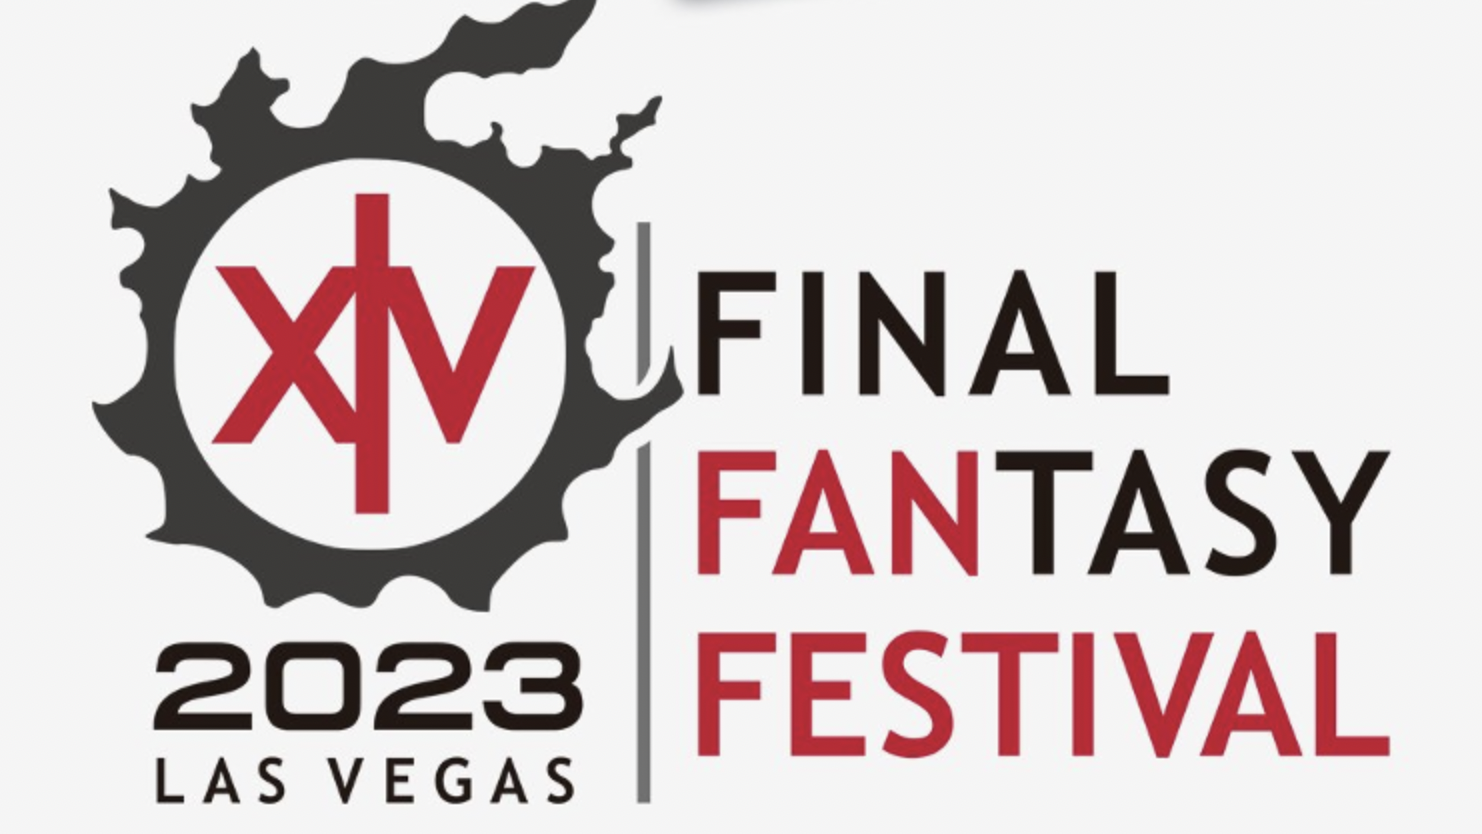 FFXIV Fan Festival 2023 General Ticket Sales Will Consist of 